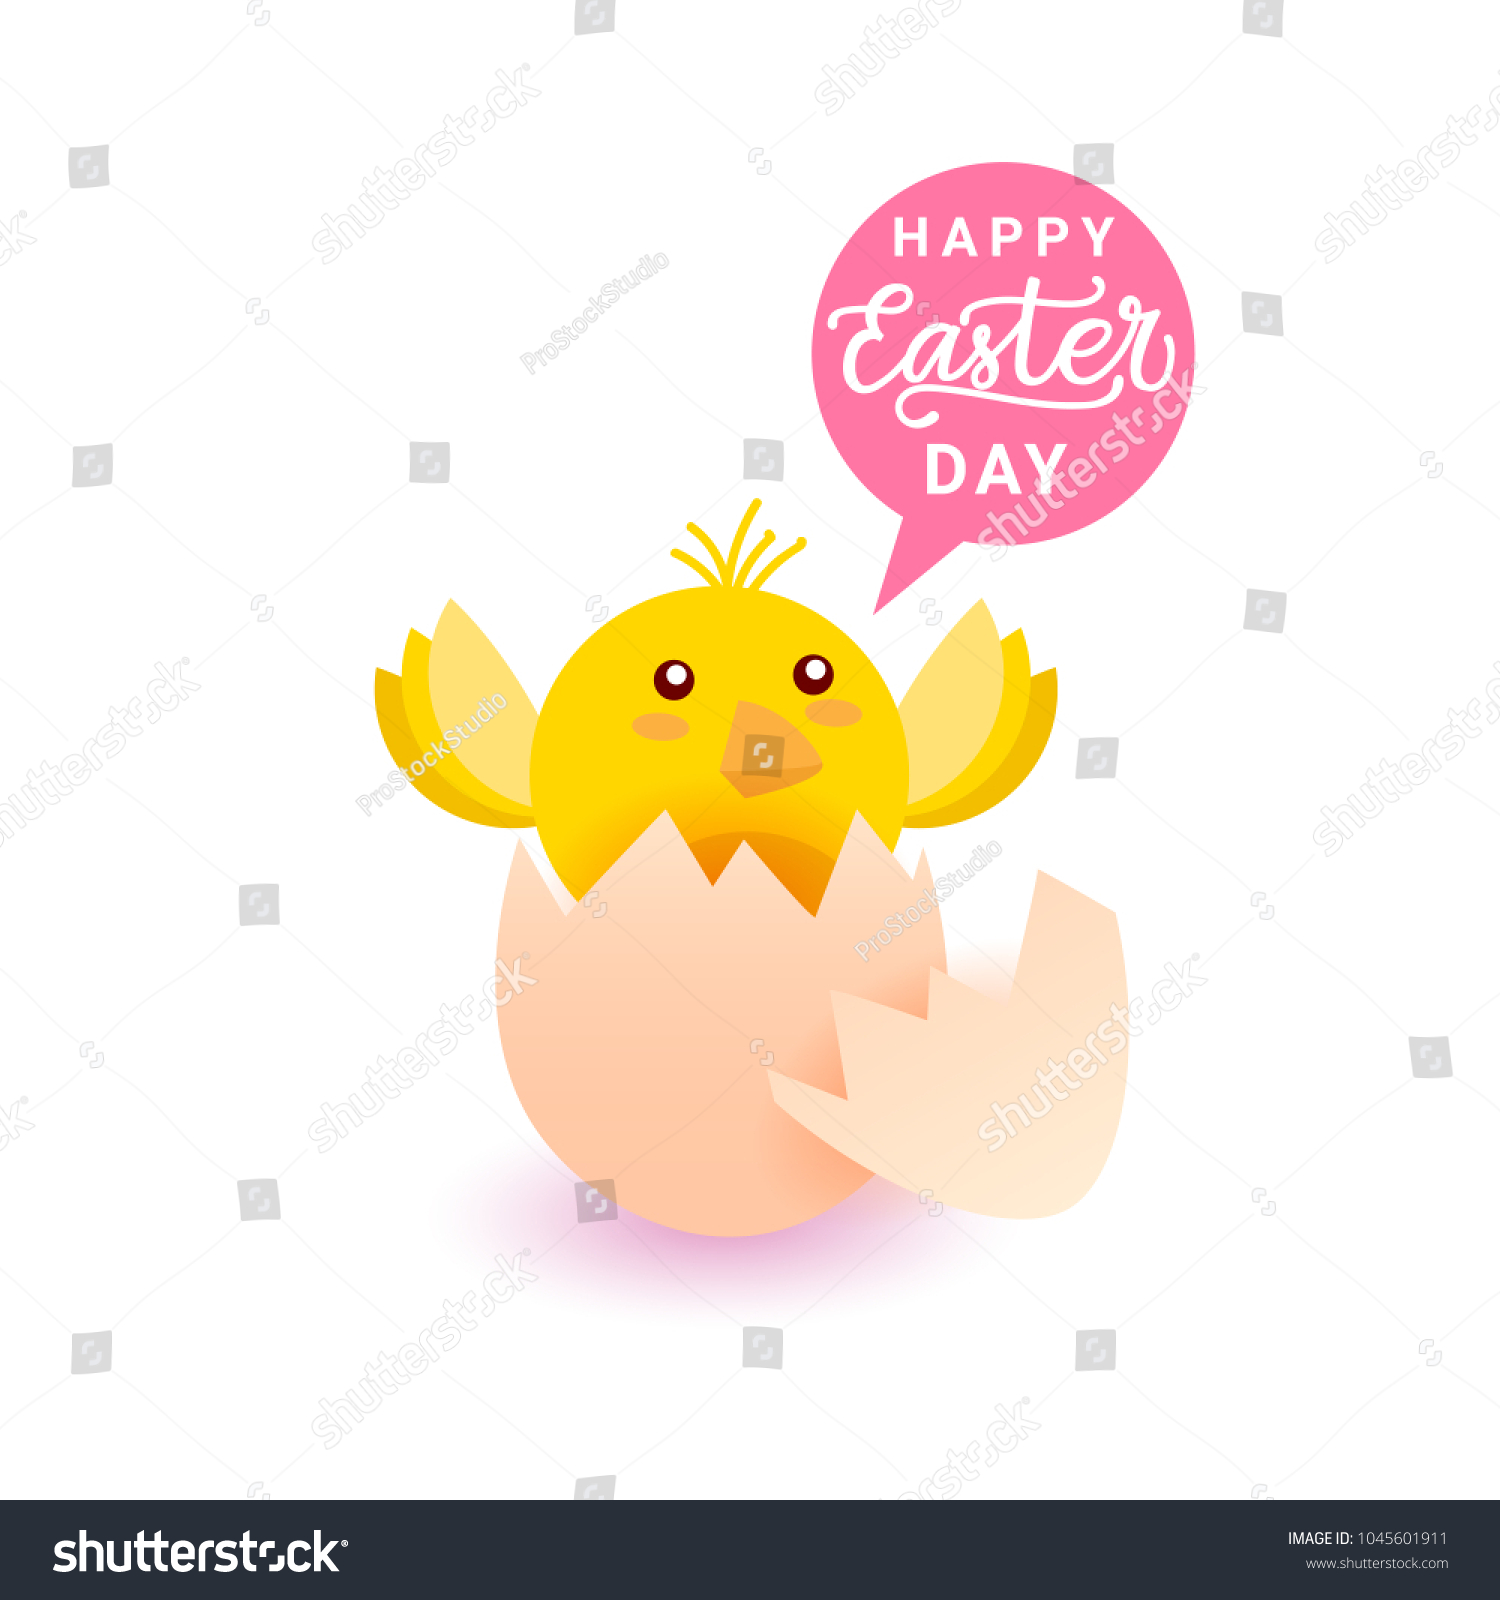 Happy Easter Illustrations, Stock Vectors, Clip Art & Backgrounds - iStock